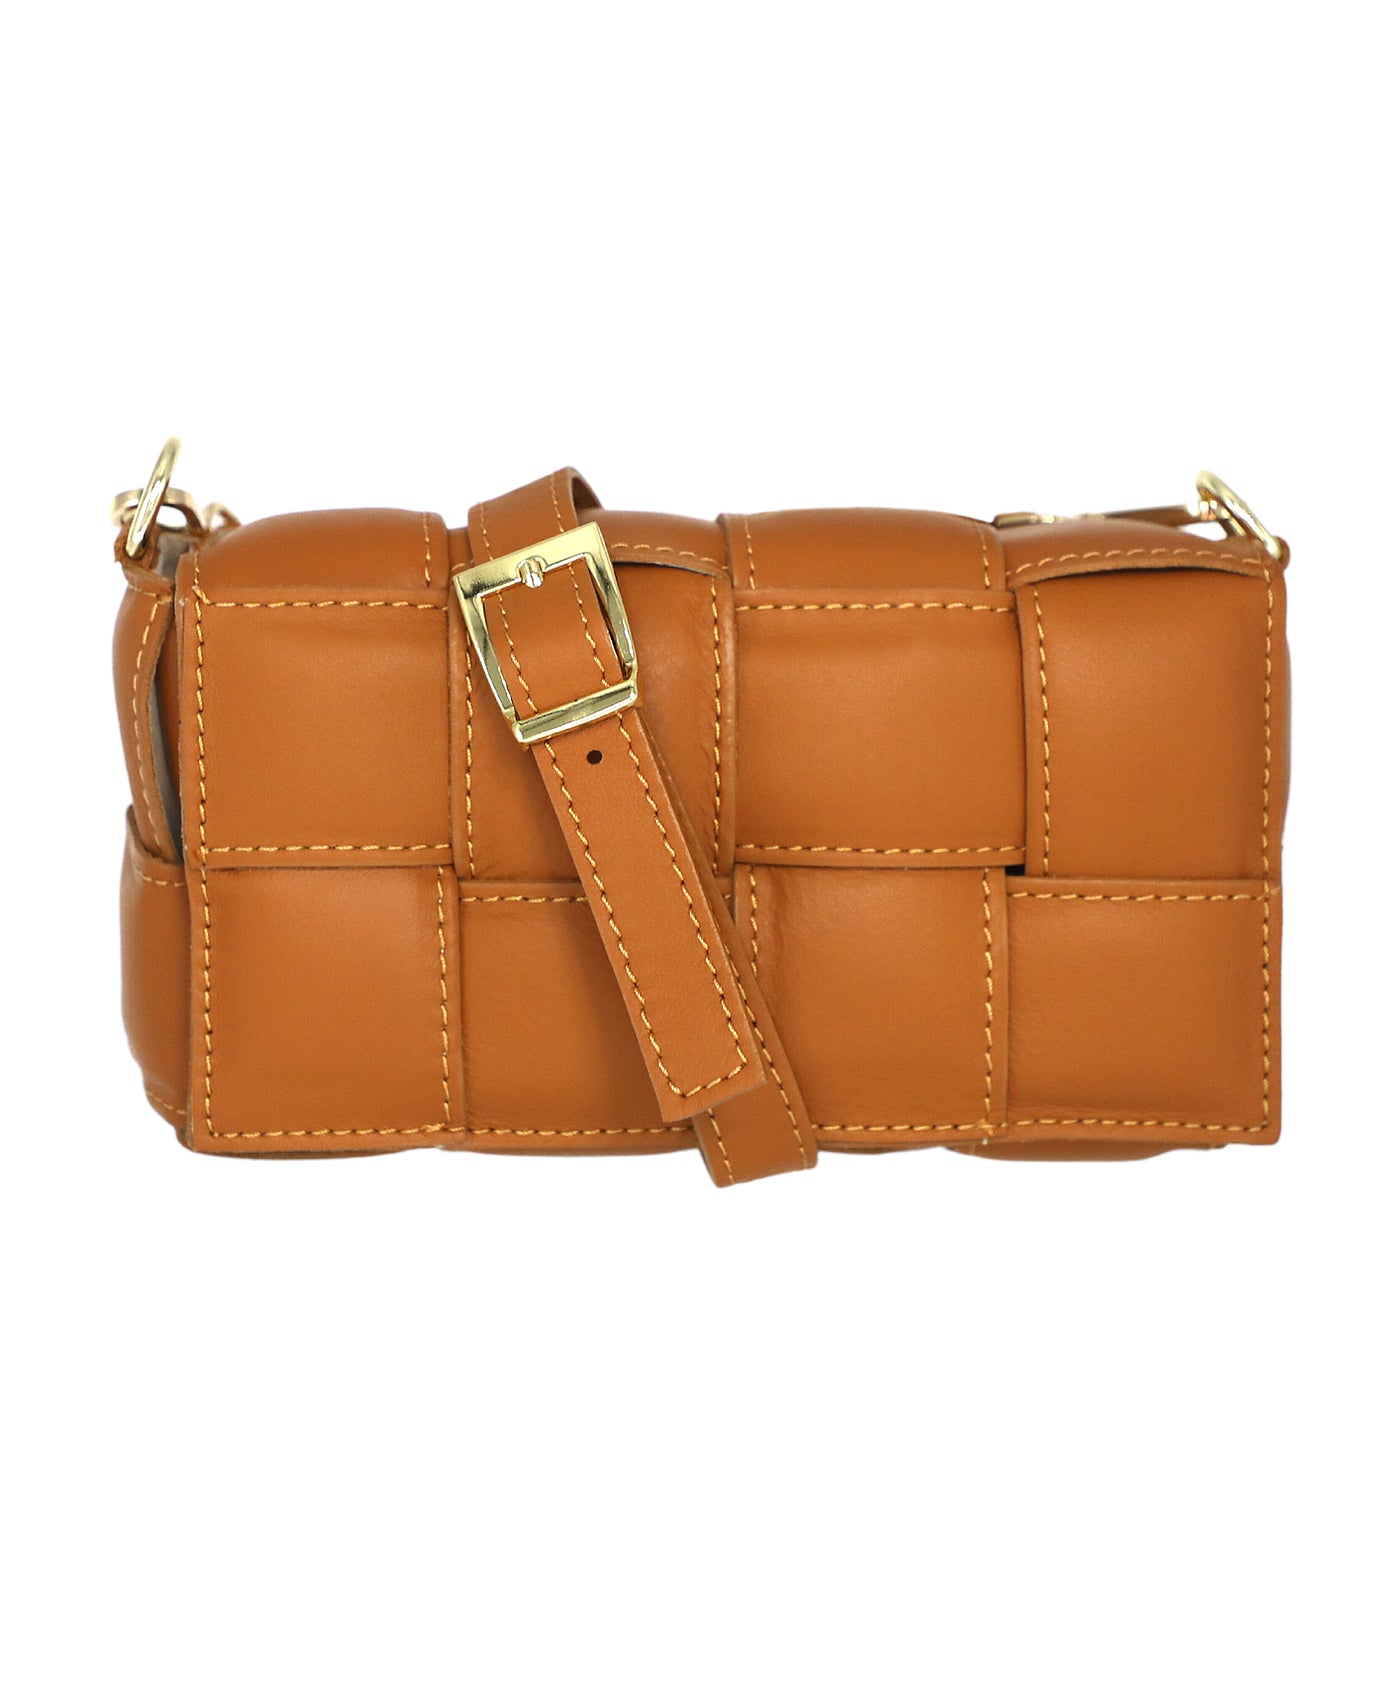 Woven Leather Crossbody Bag image 1